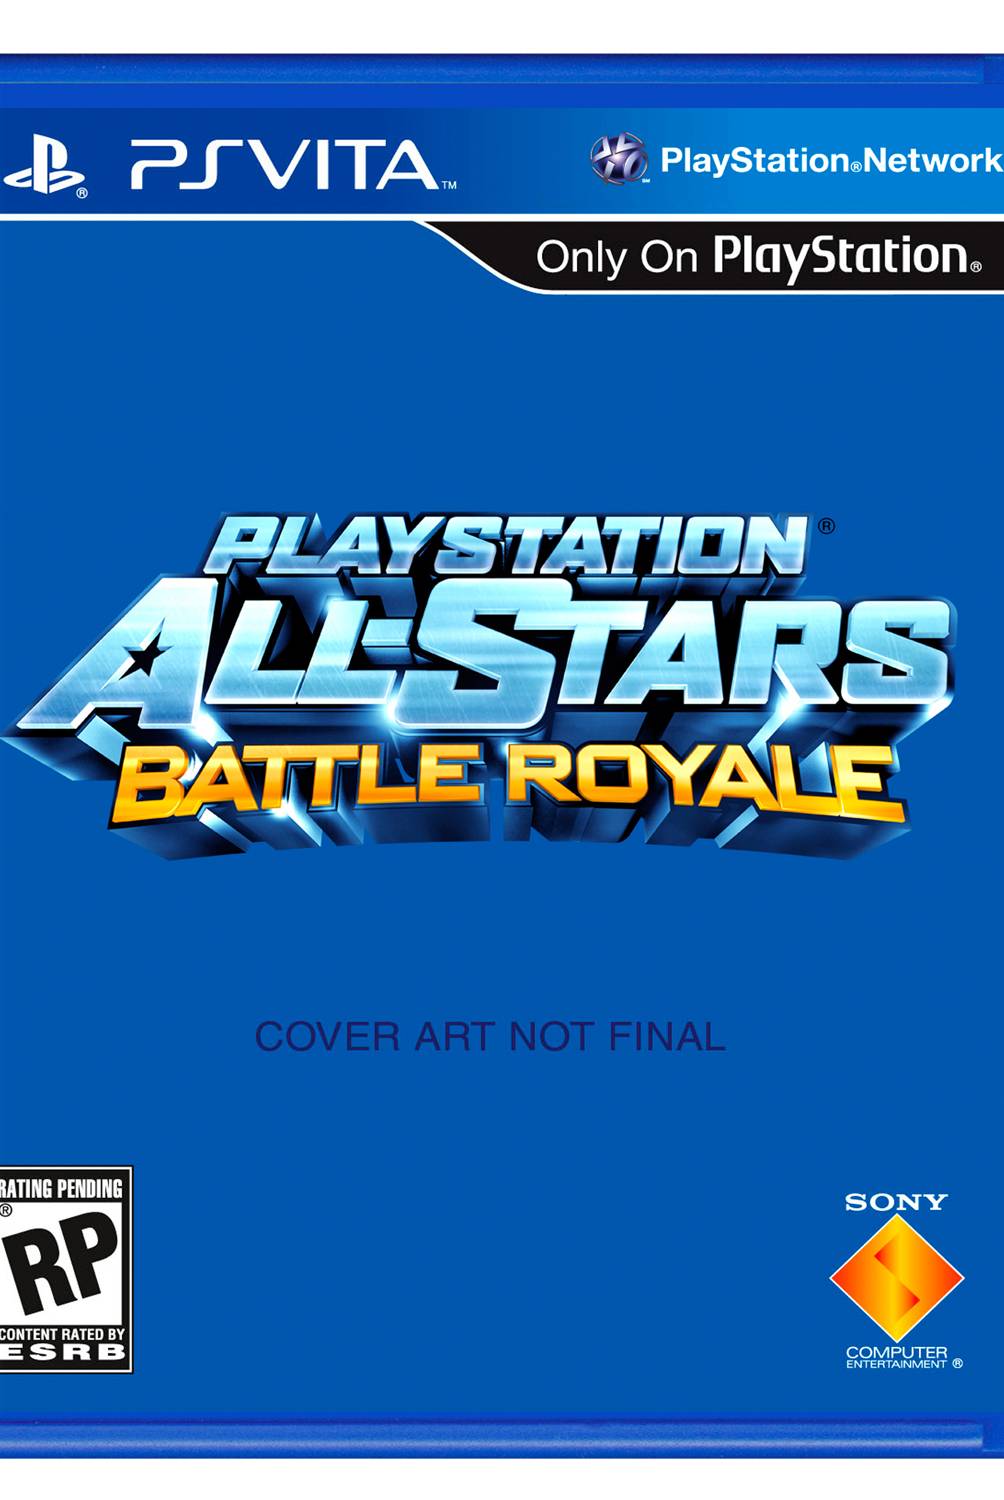 Sony - All Stars Battle Royale PSV